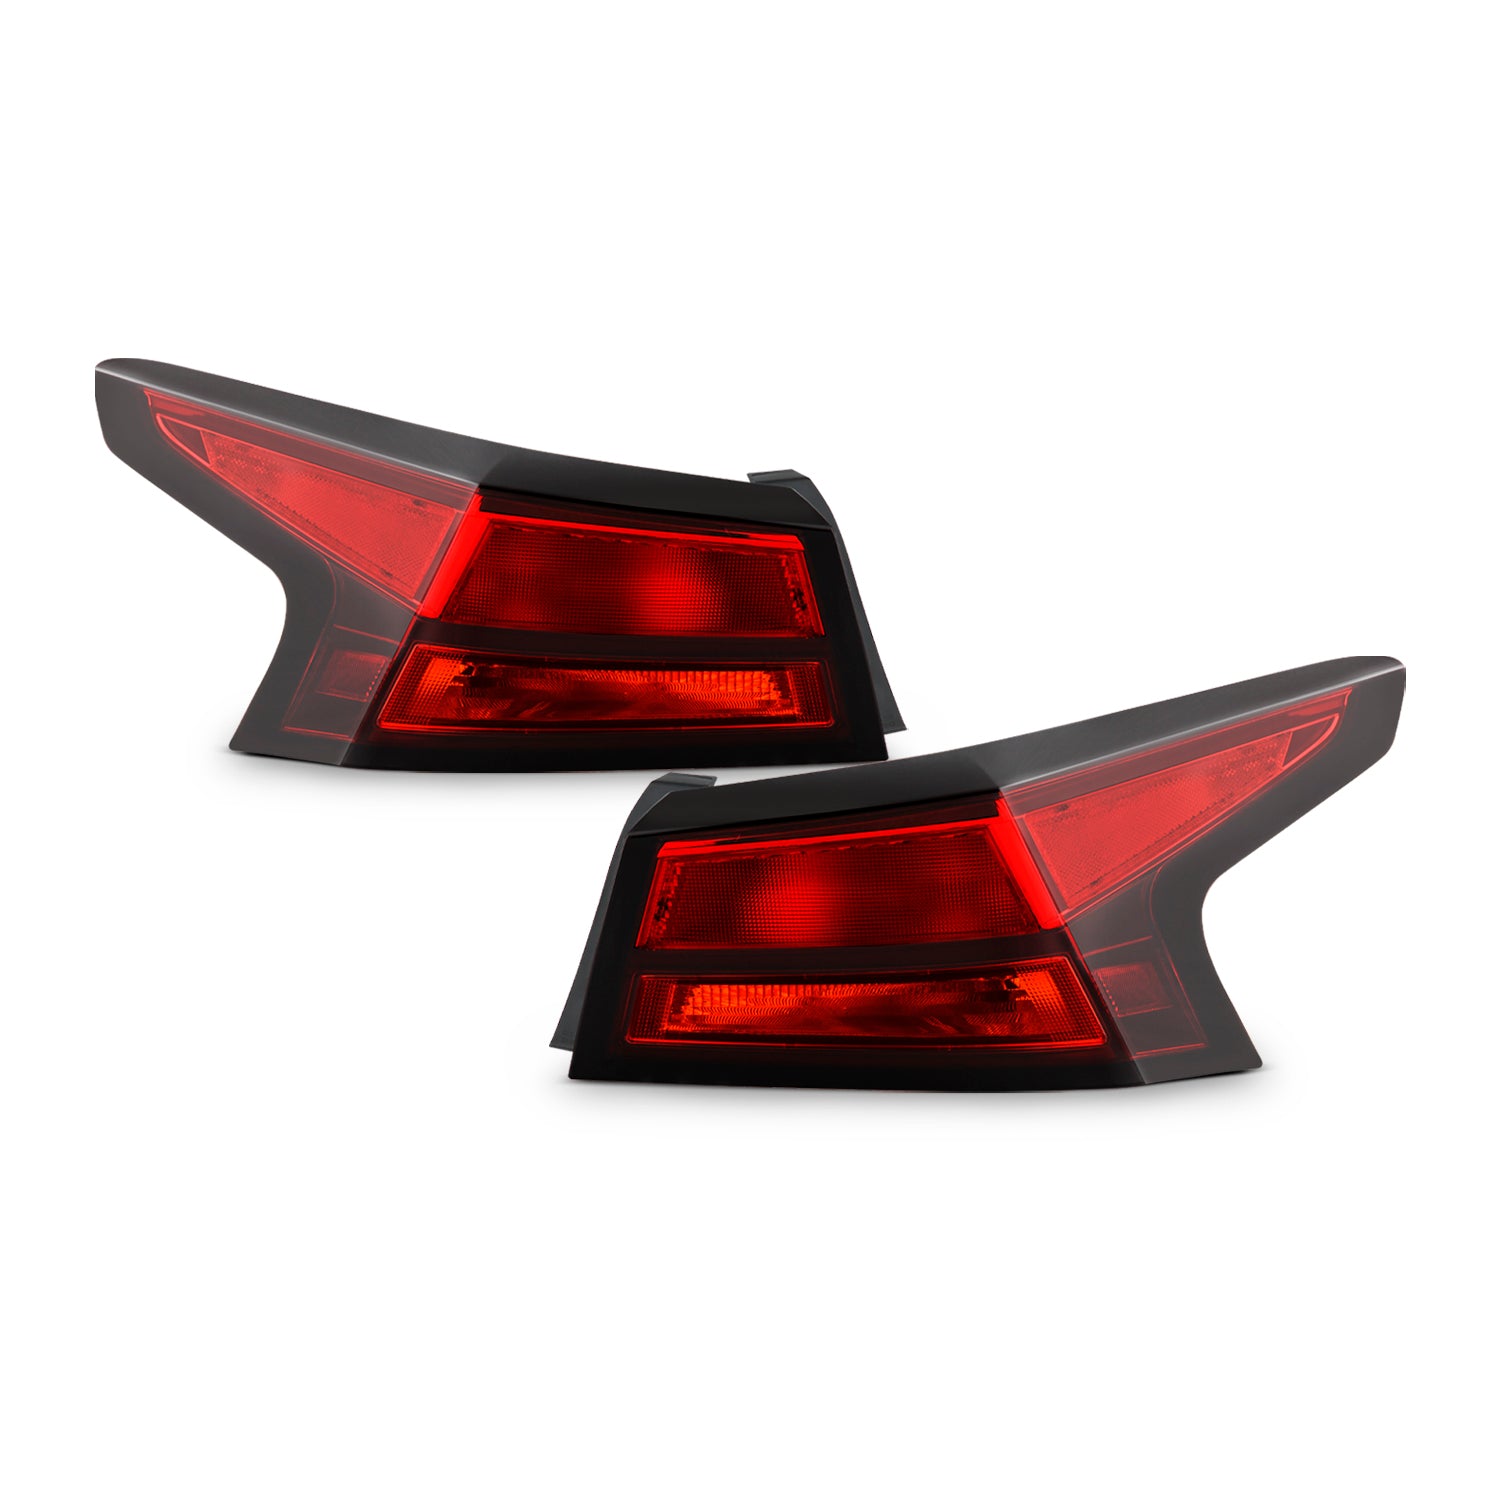 AKKON - Fits 2019-2022 Altima Sedan Model [Halogen Type] All Red Tail